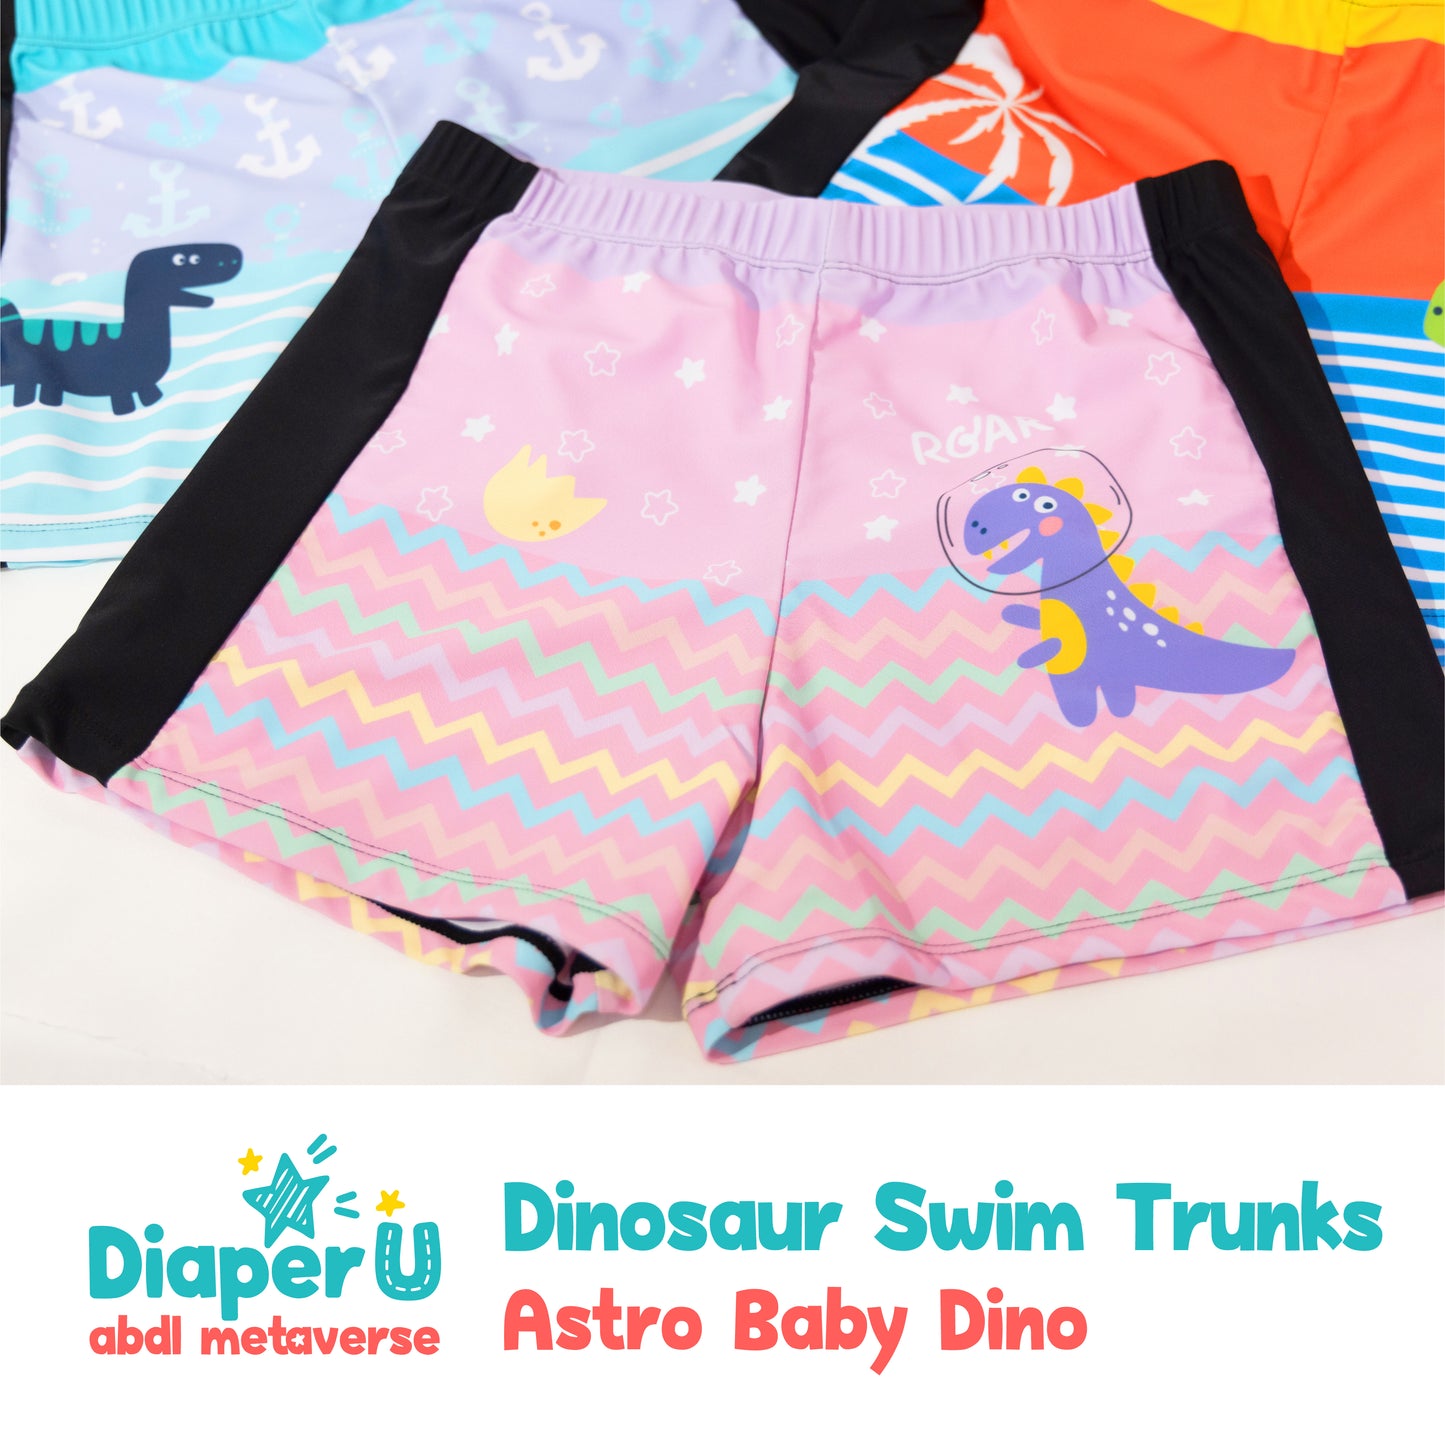 ABDL Dinosaur Swim Trunks - Astro Baby Dino